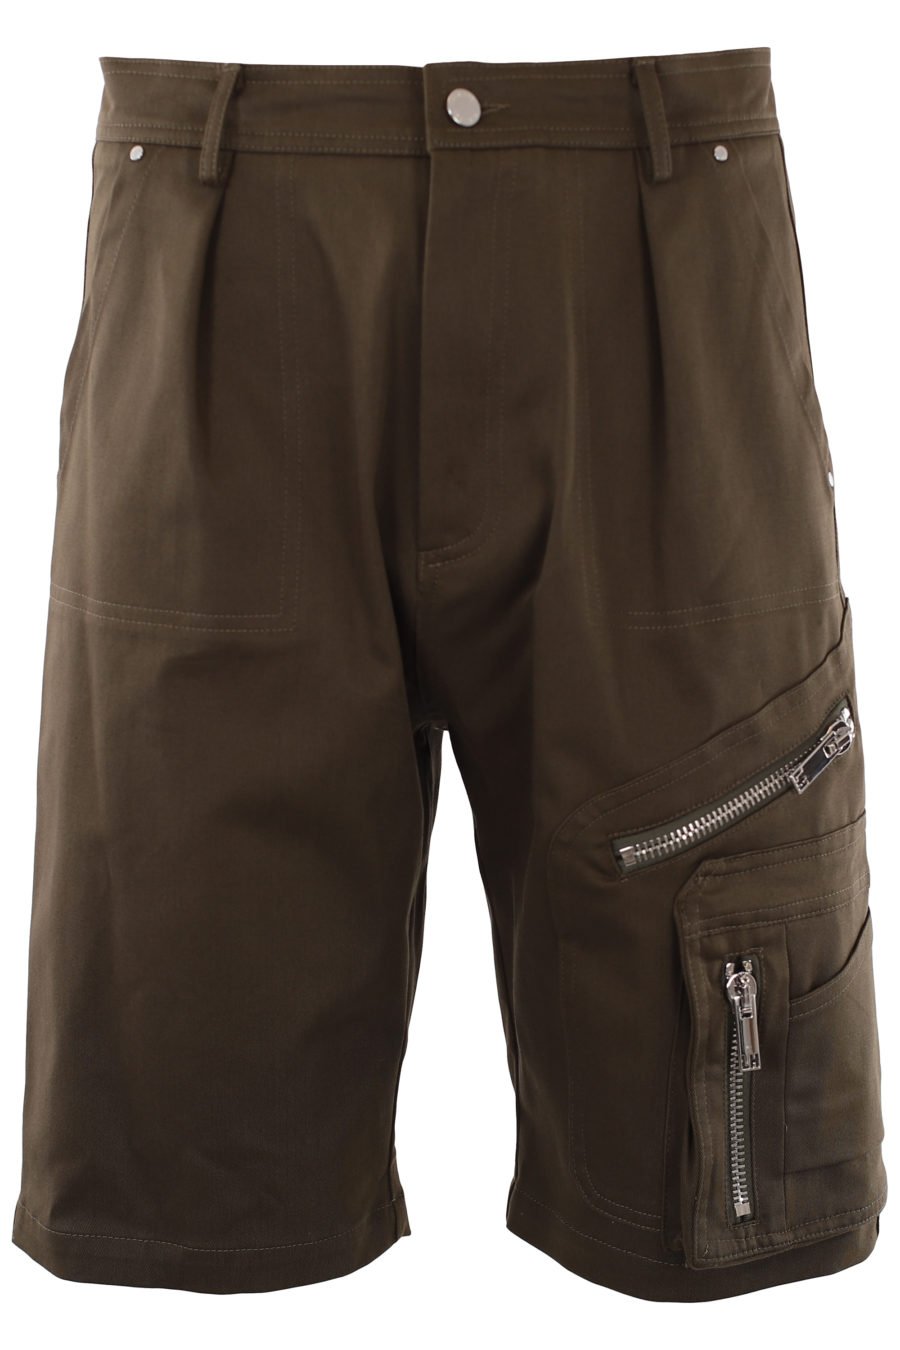 Pantalón corto verde militar estilo cargo - IMG 1021